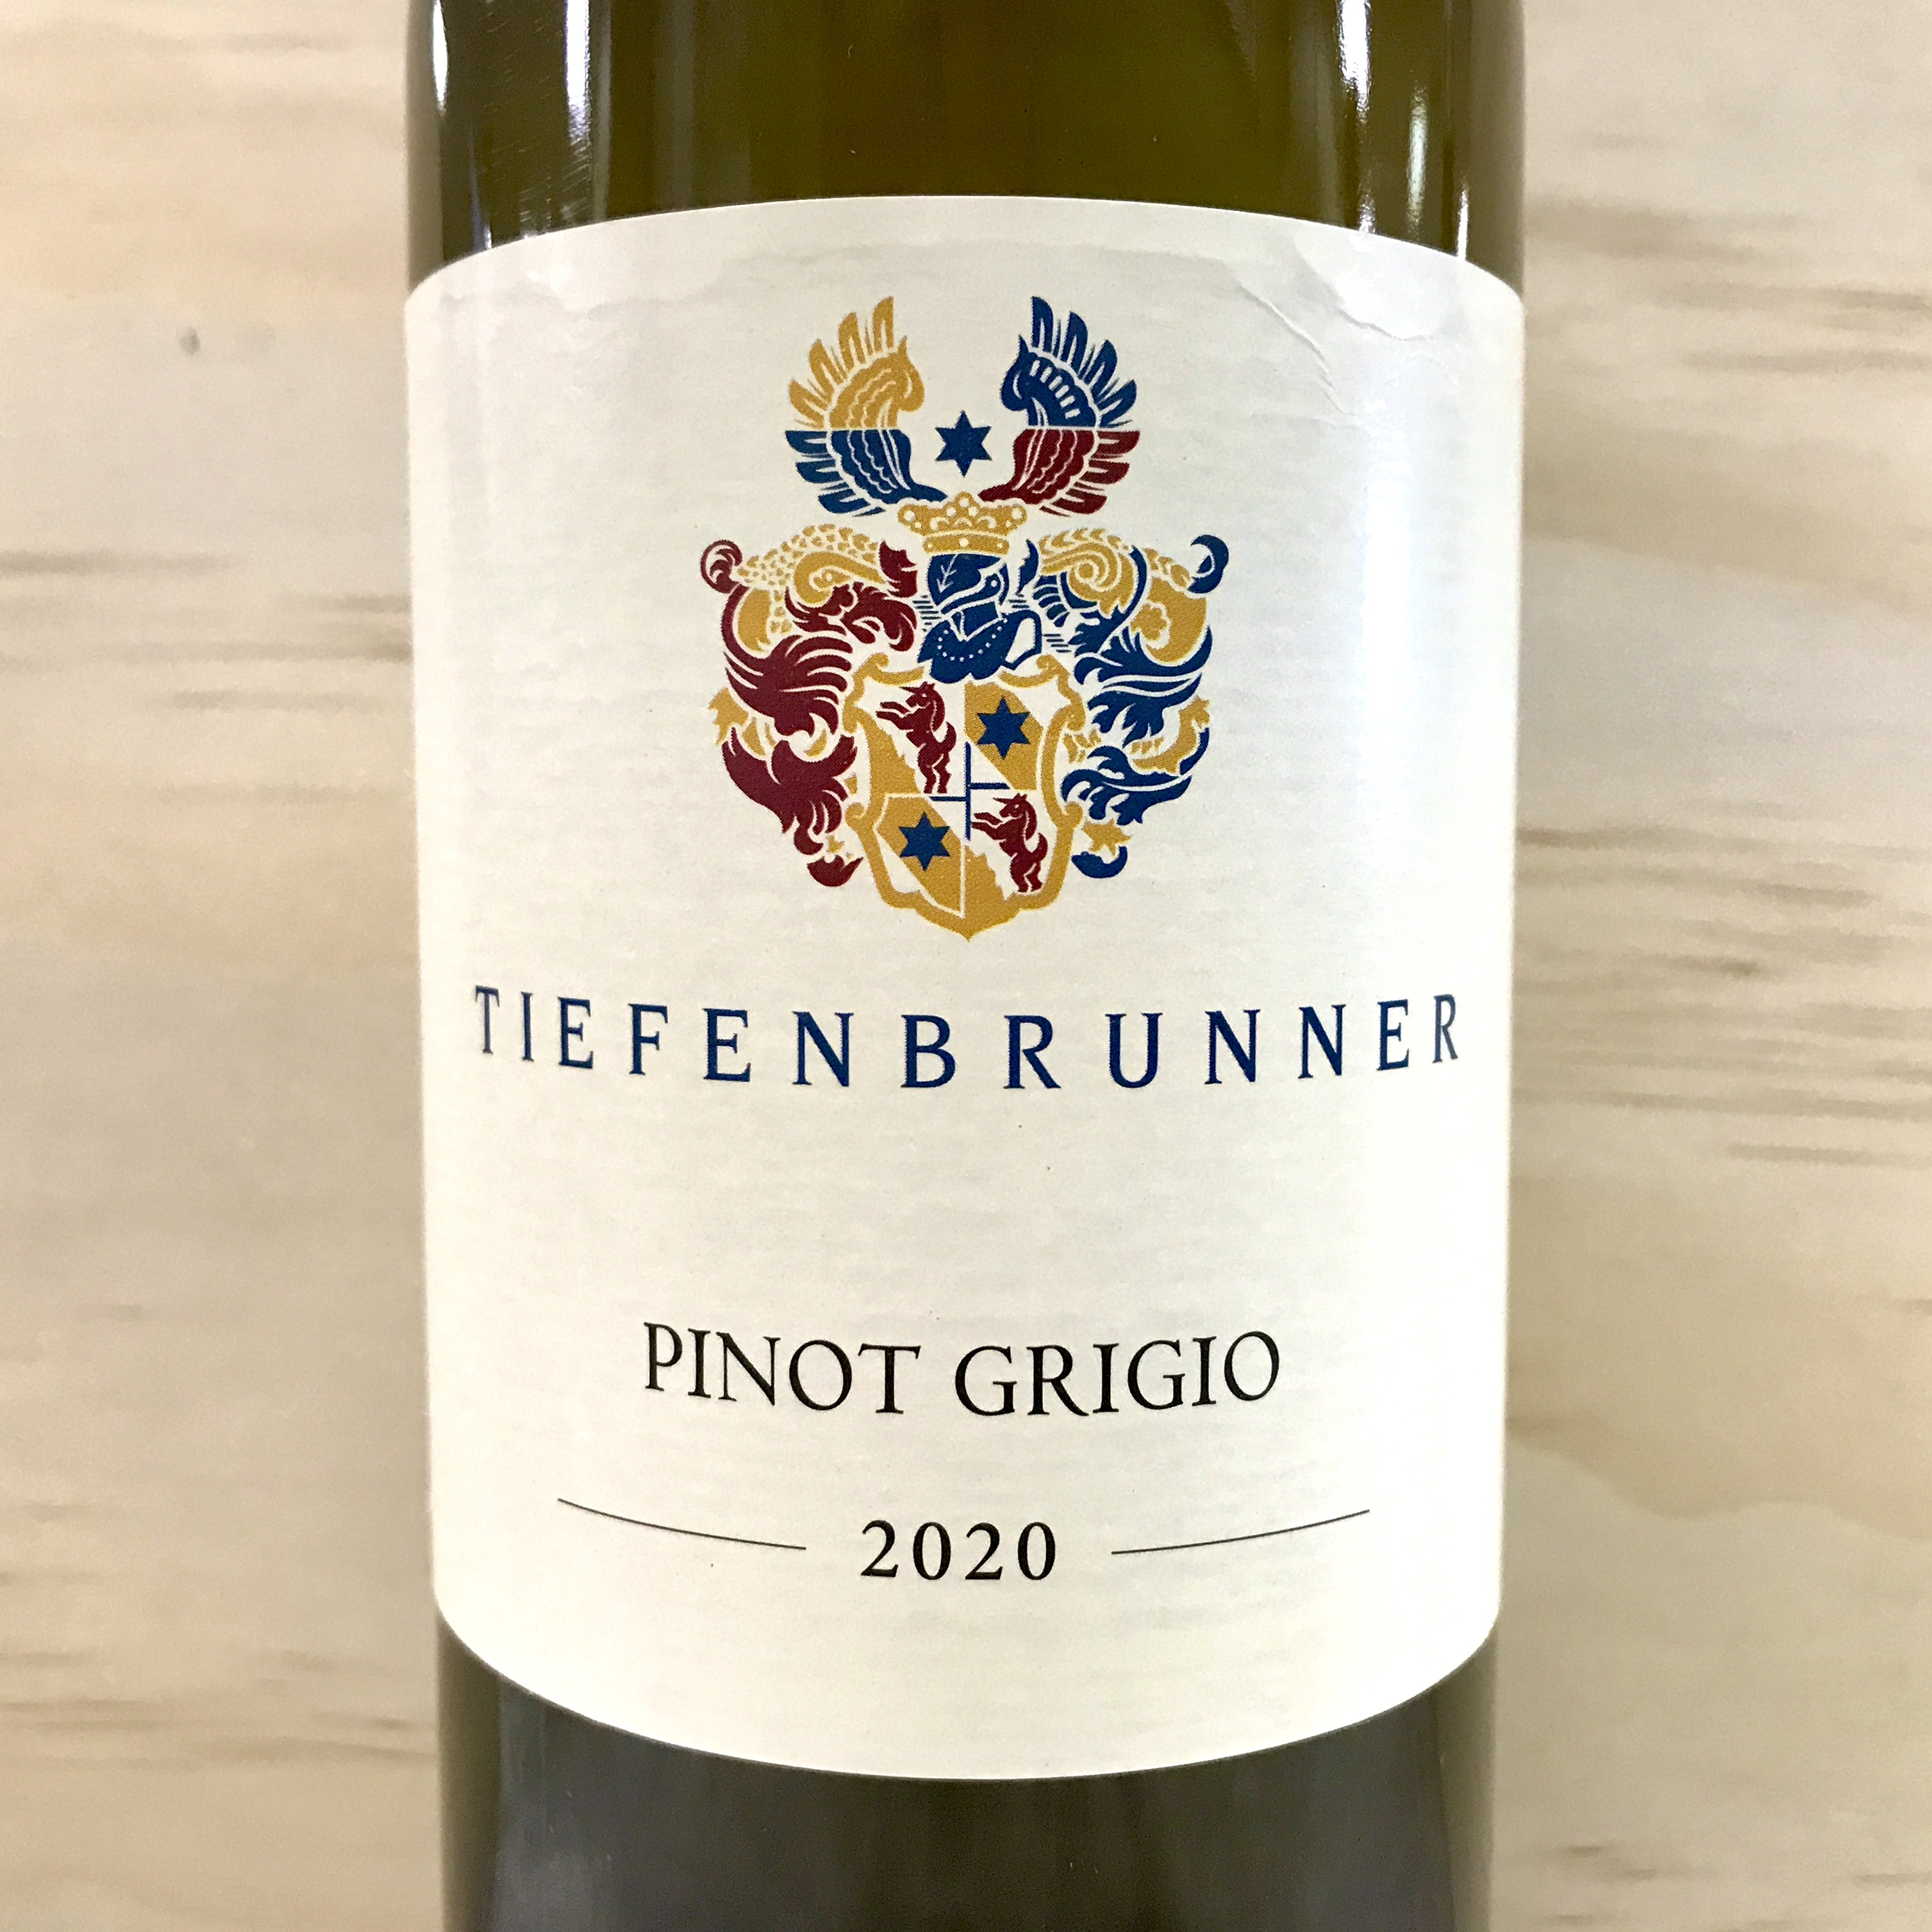 Tiefenbrunner Pinot Grigio 2020 Dolimiti IGT